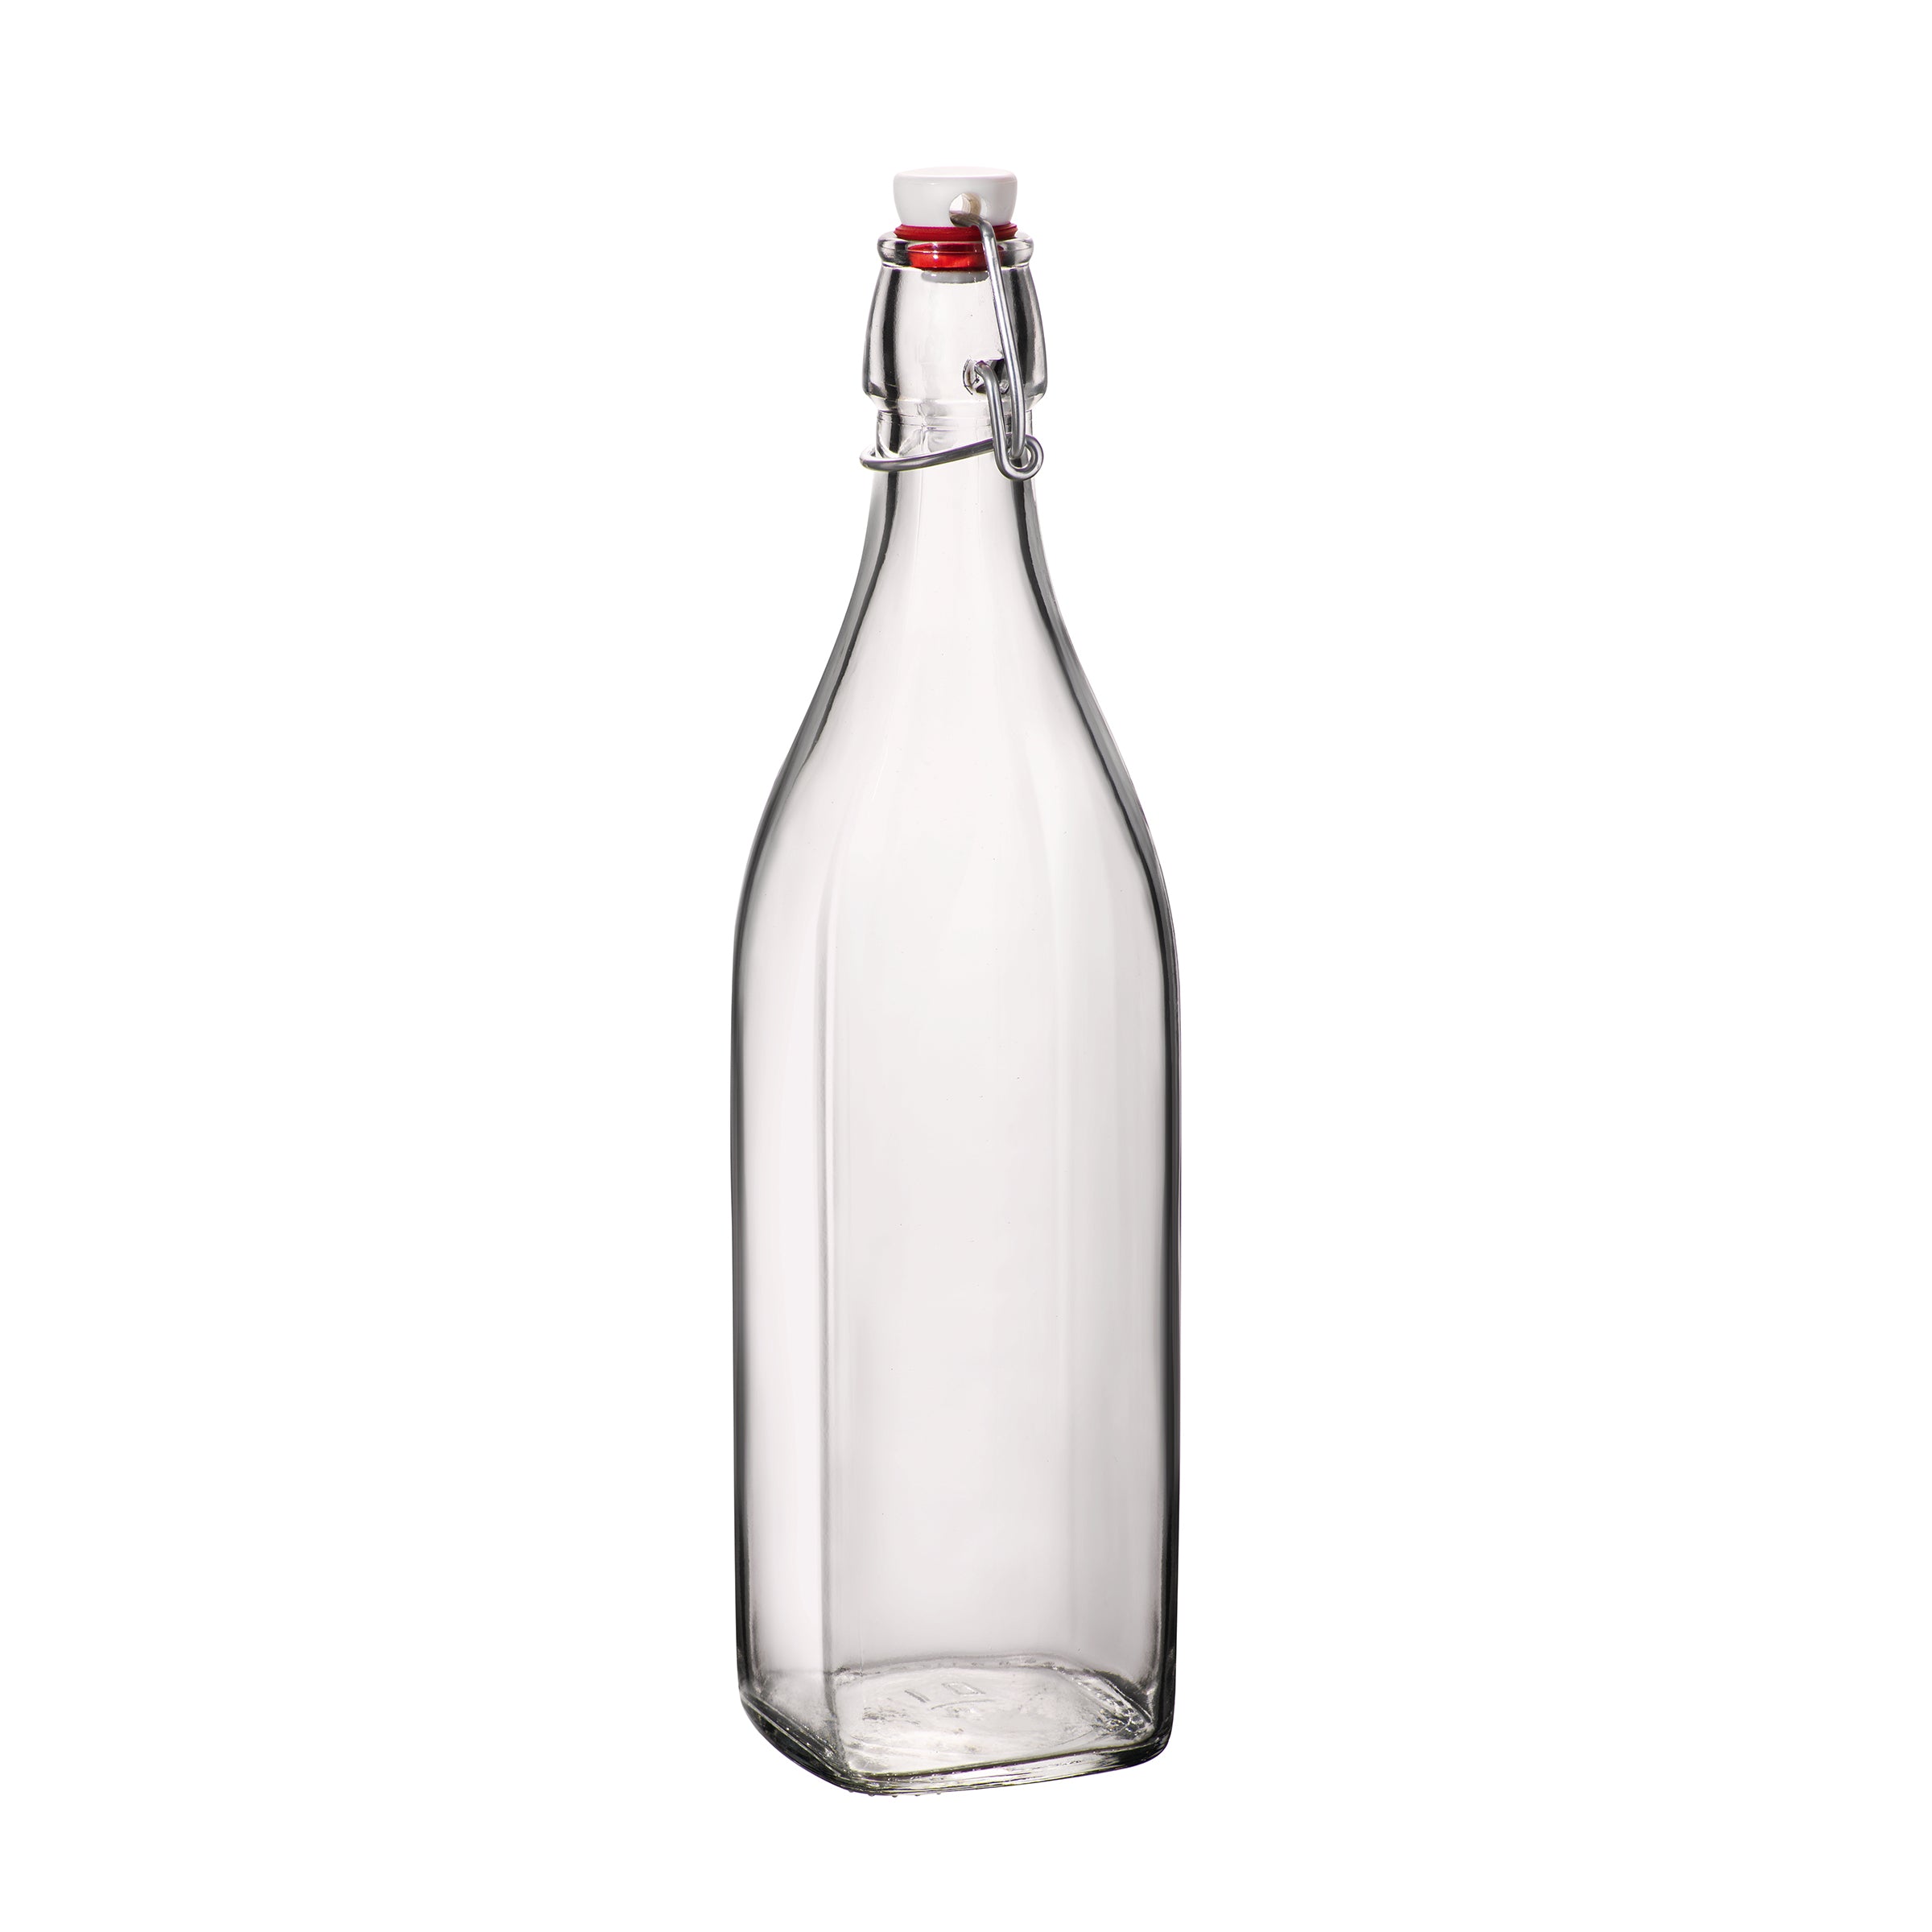 Glass Bottles – Bormioli Rocco USA